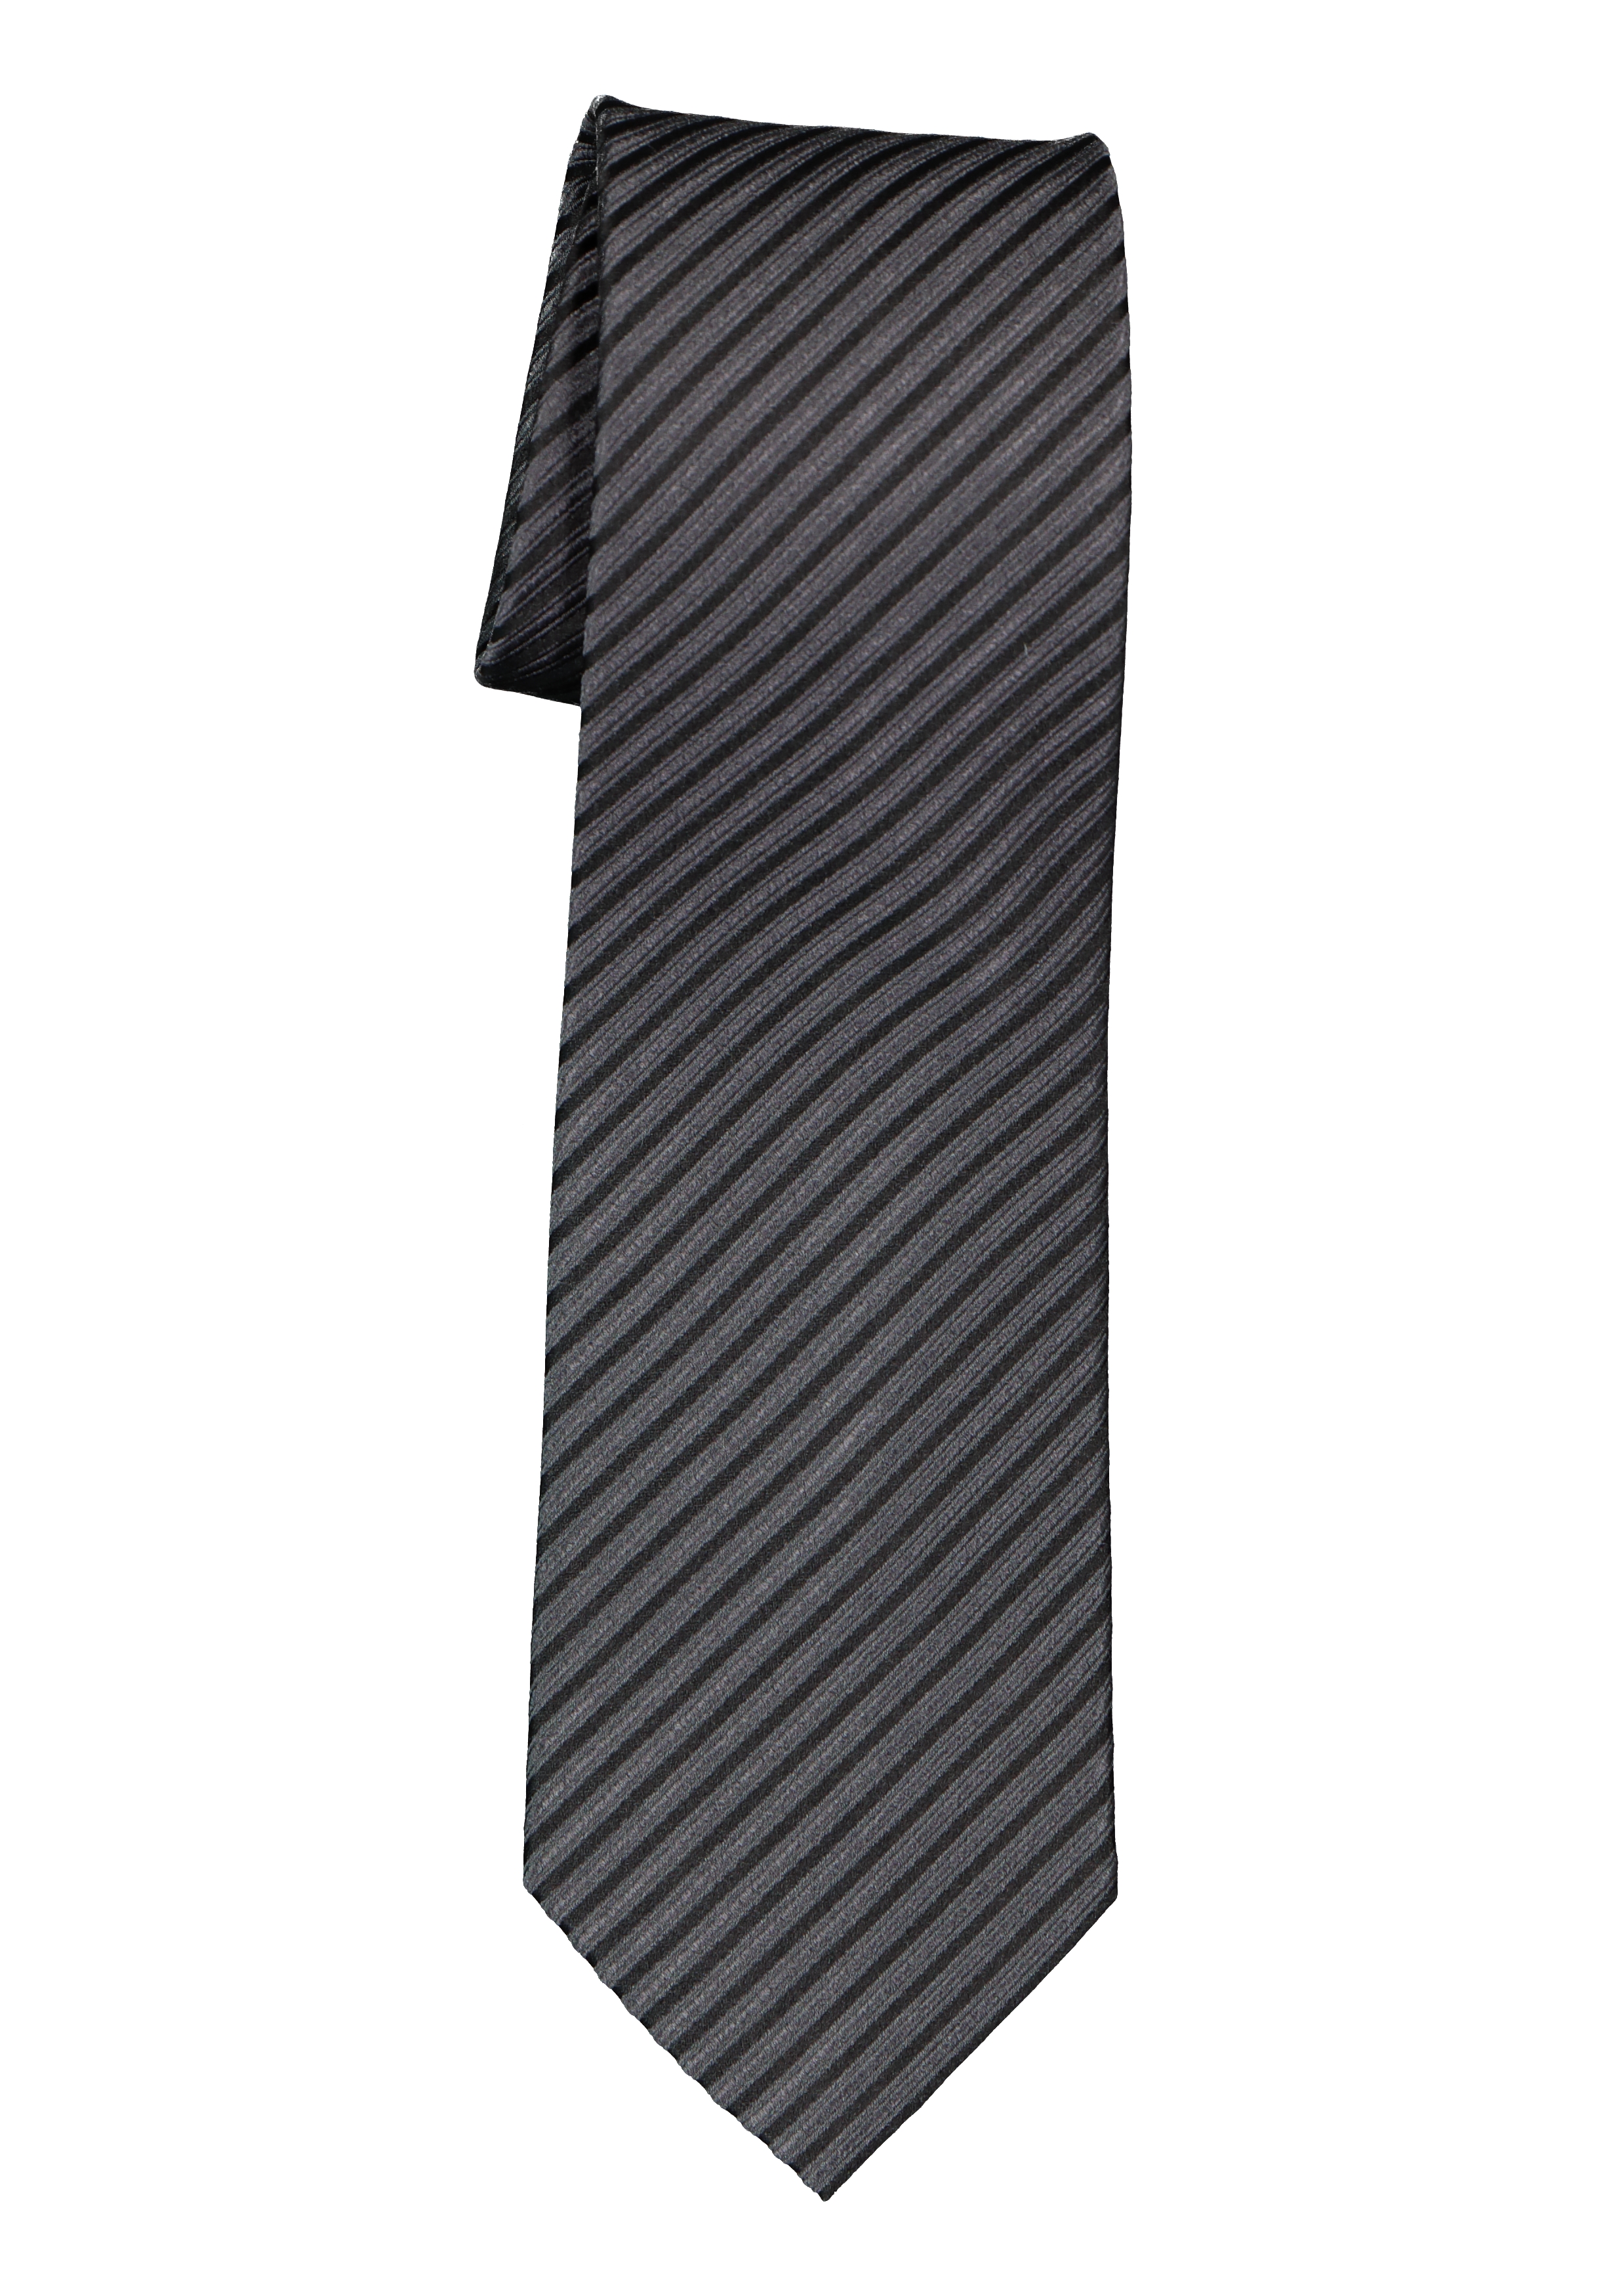 ETERNA stropdas, zwart gestreept